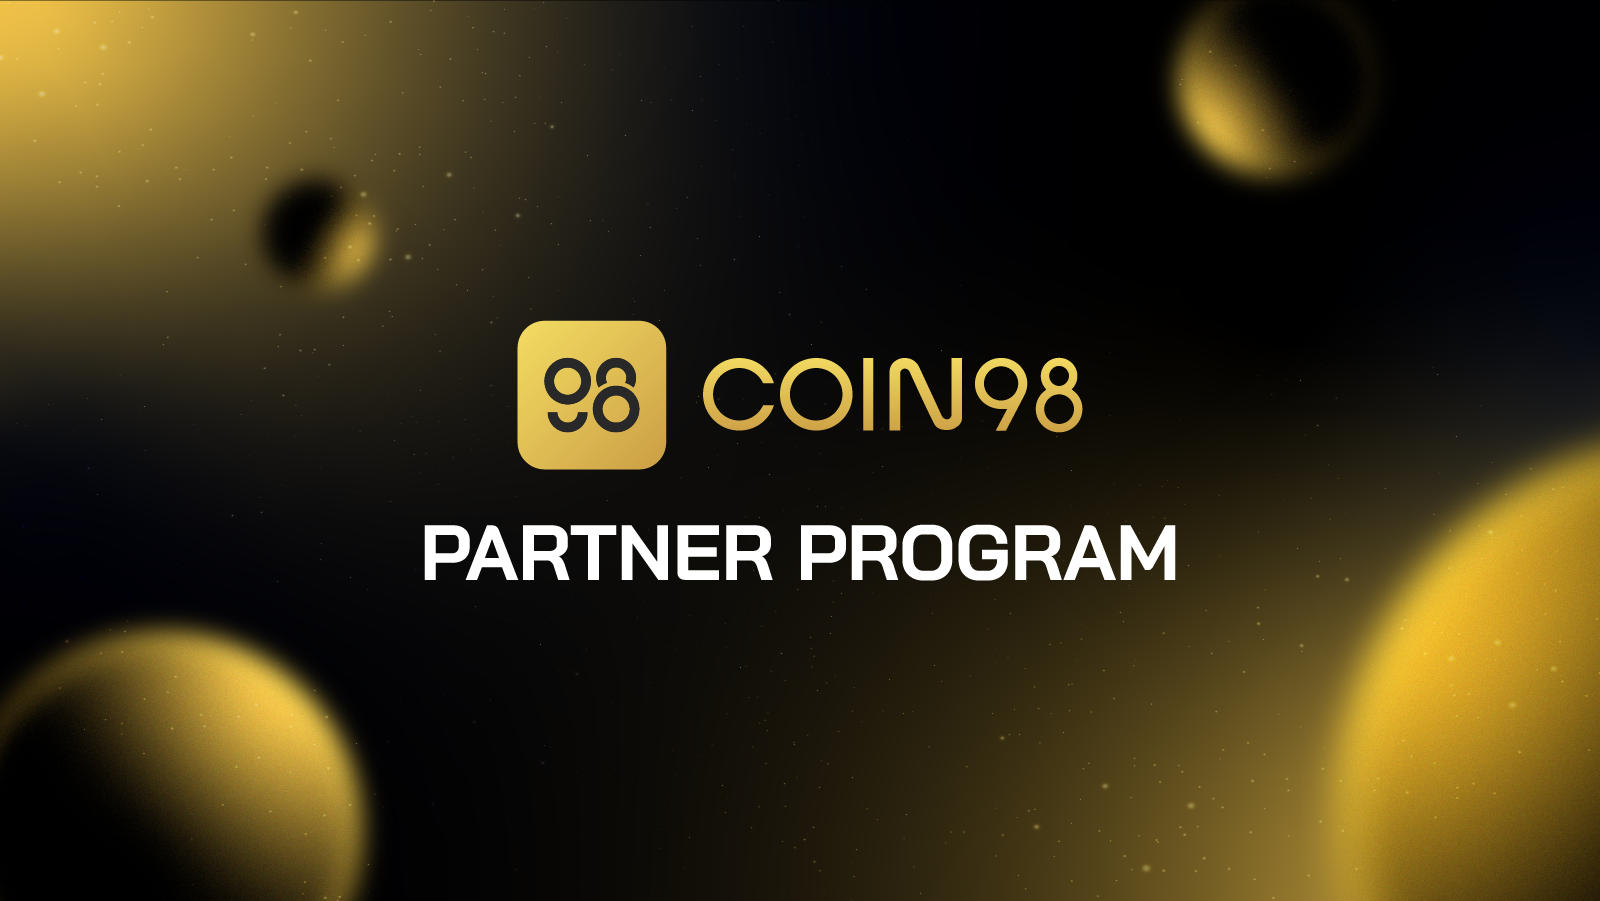 Announcing Coin98 Partner Program